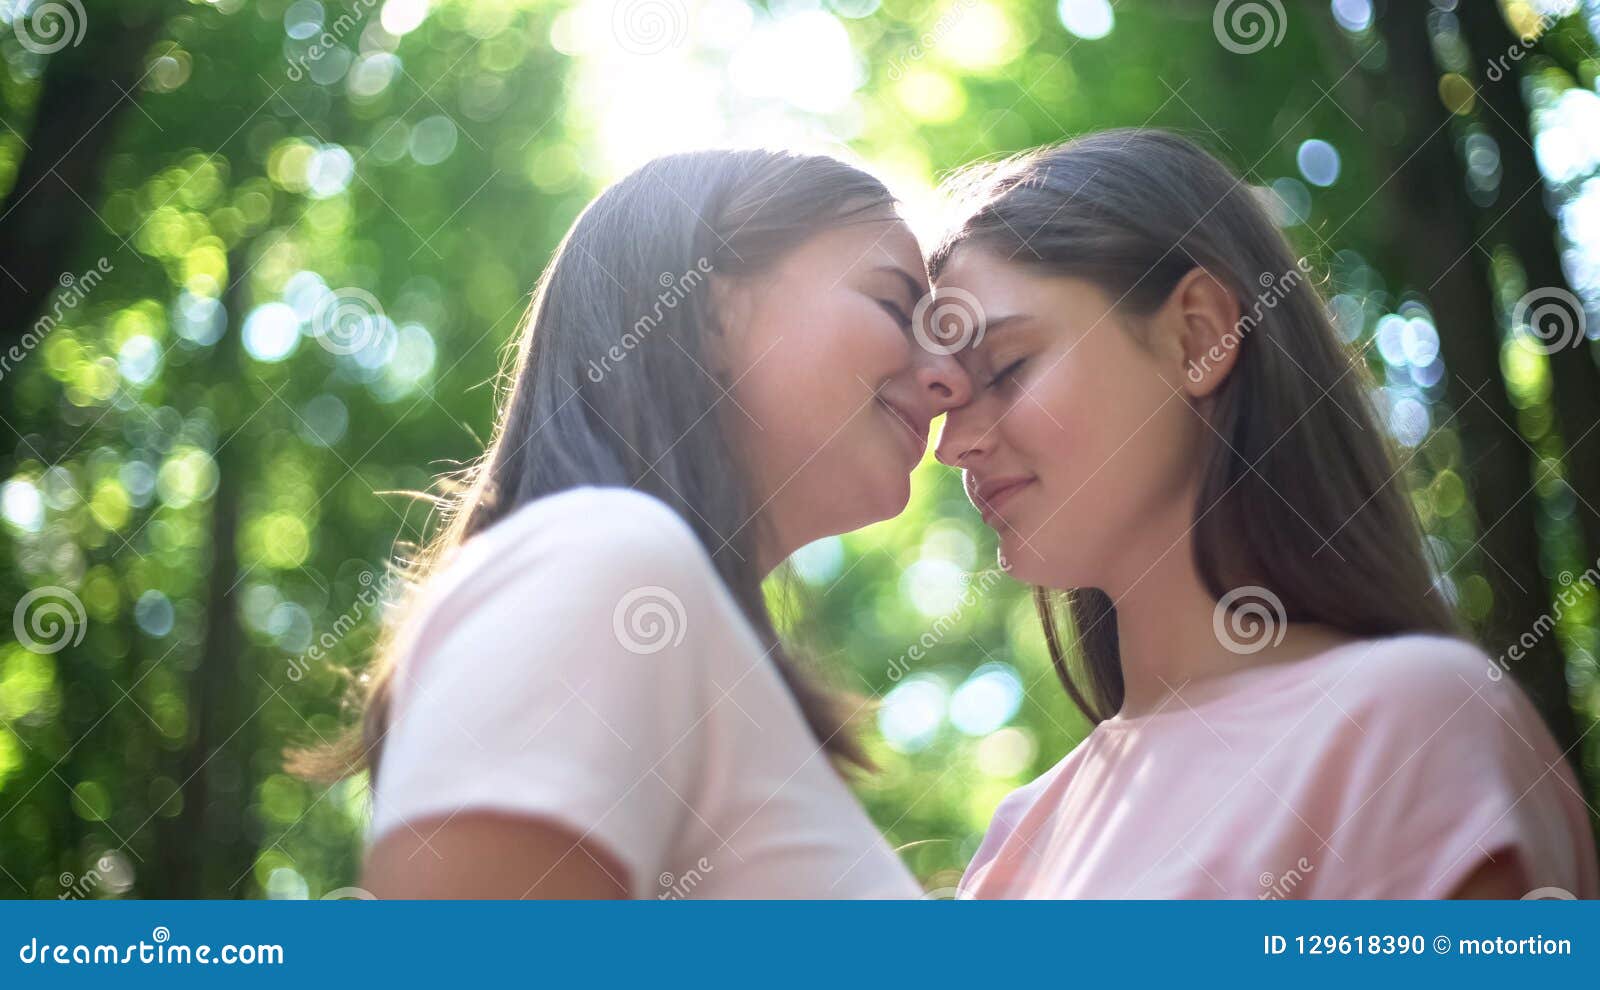 chaud lesbienne gode sexe